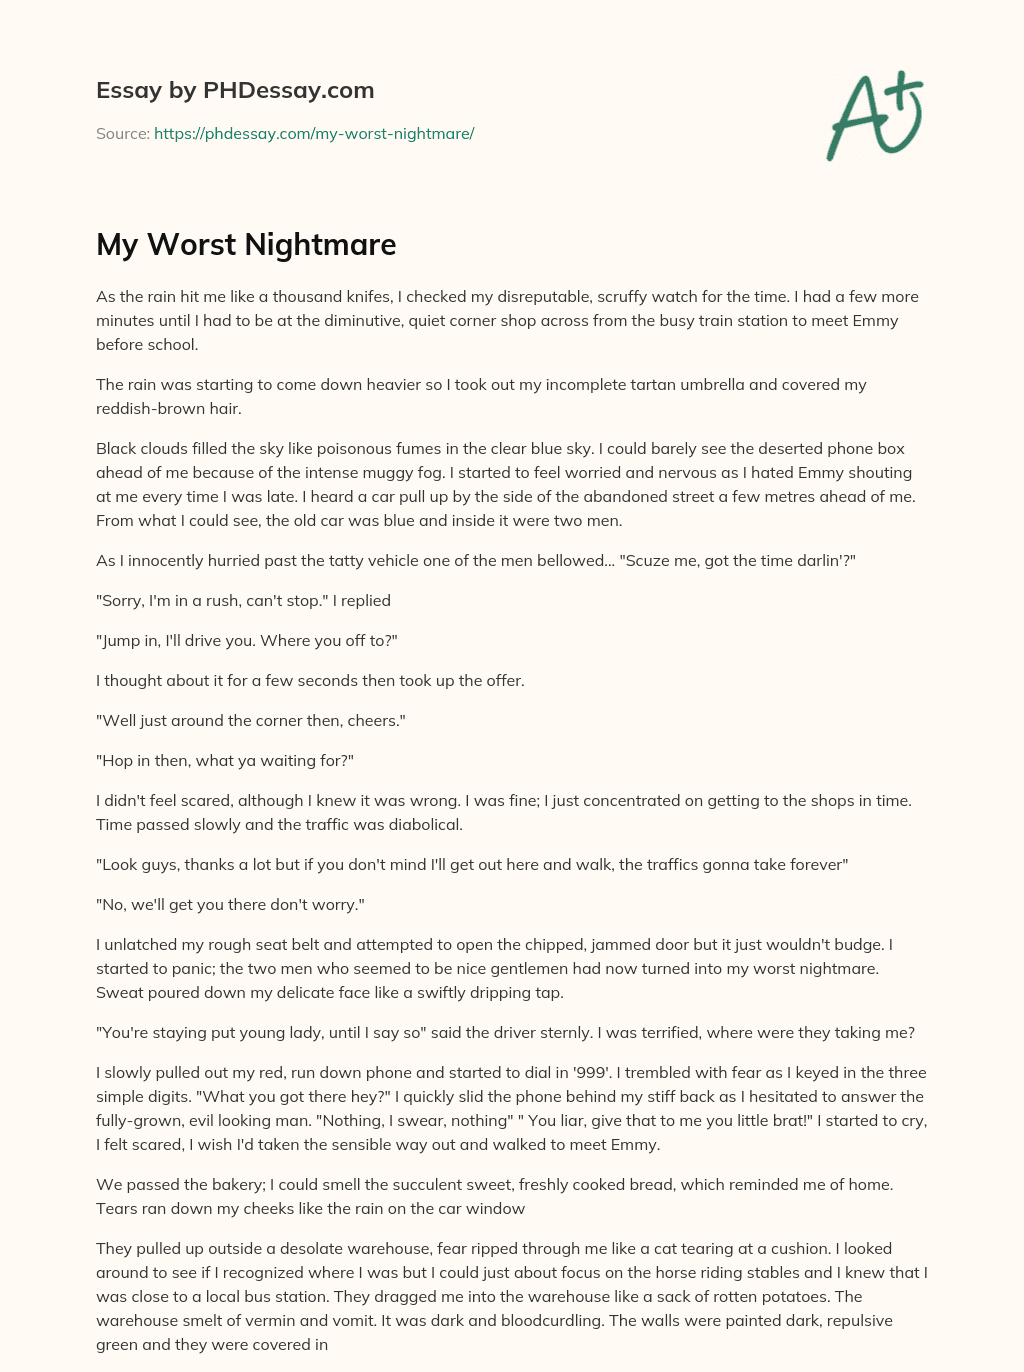 my worst nightmare essay 100 words in english